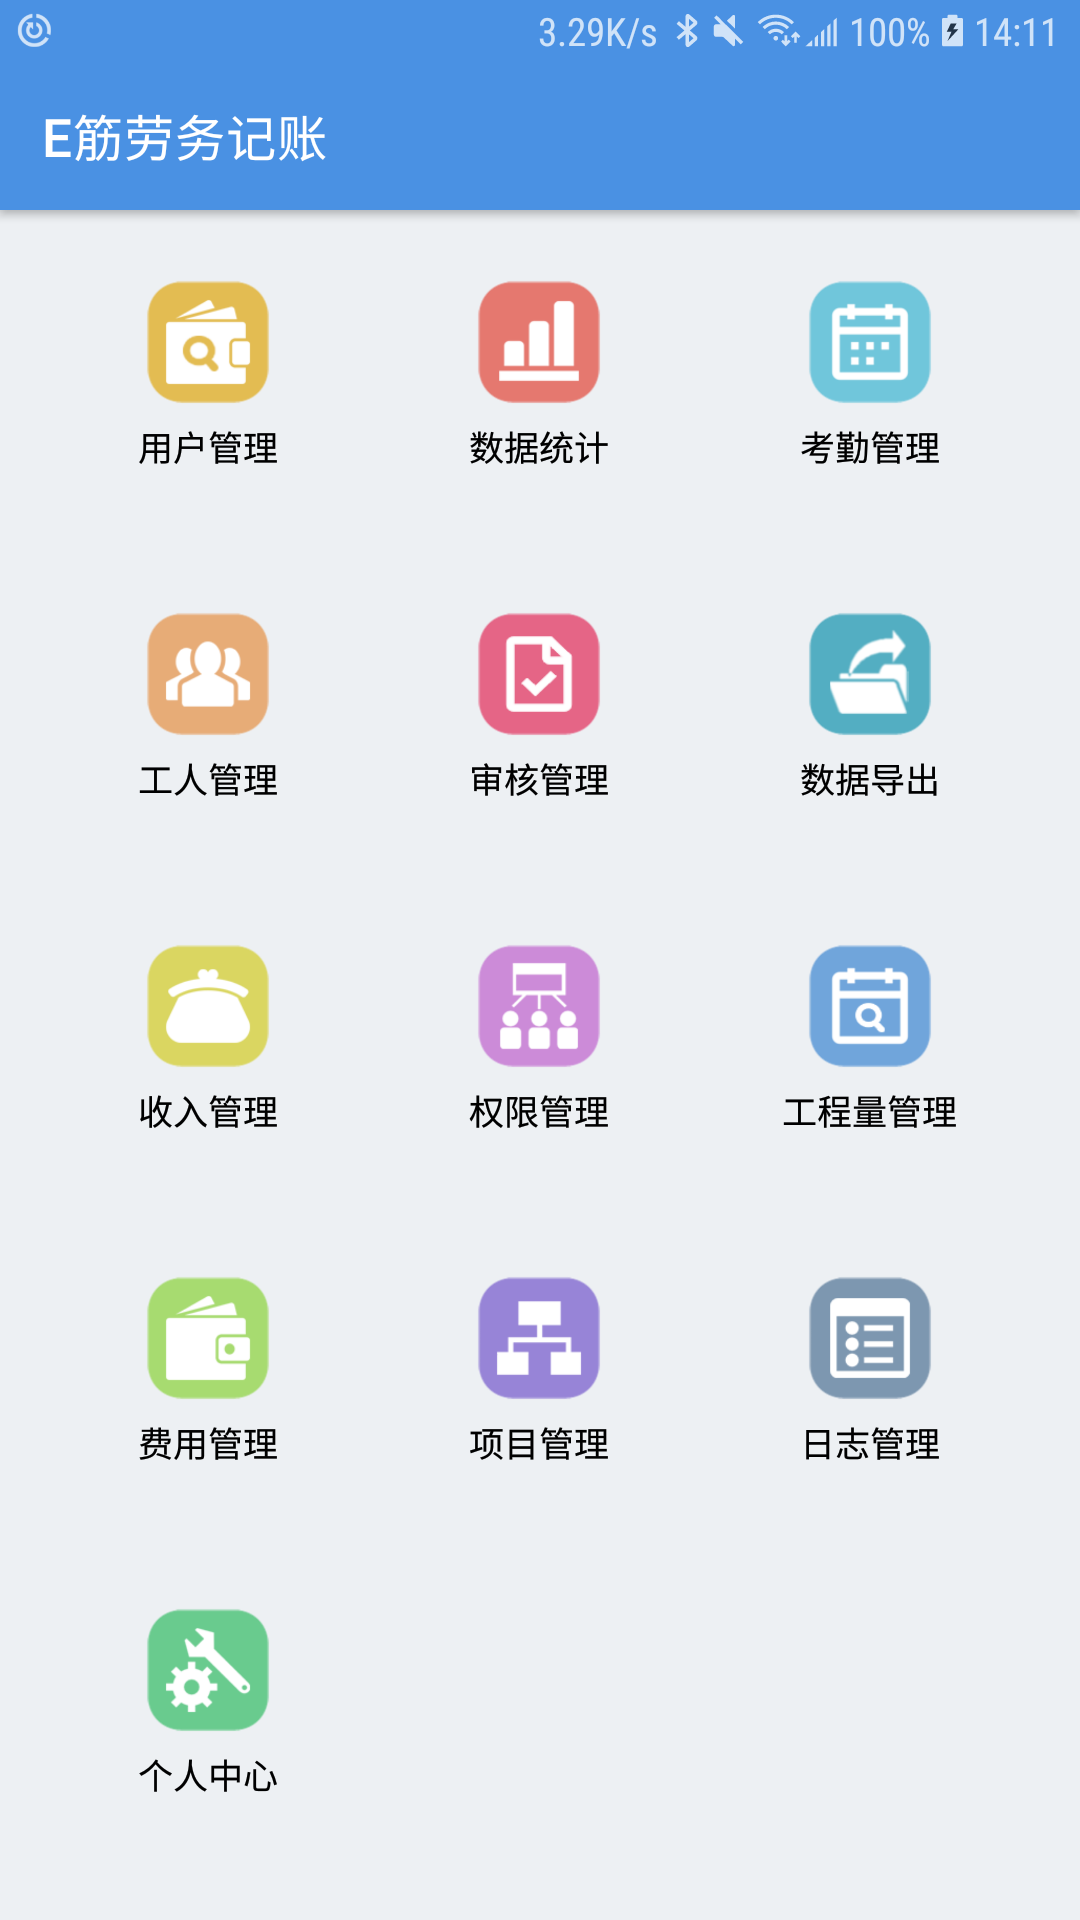 E筋劳务记账app3.5.7